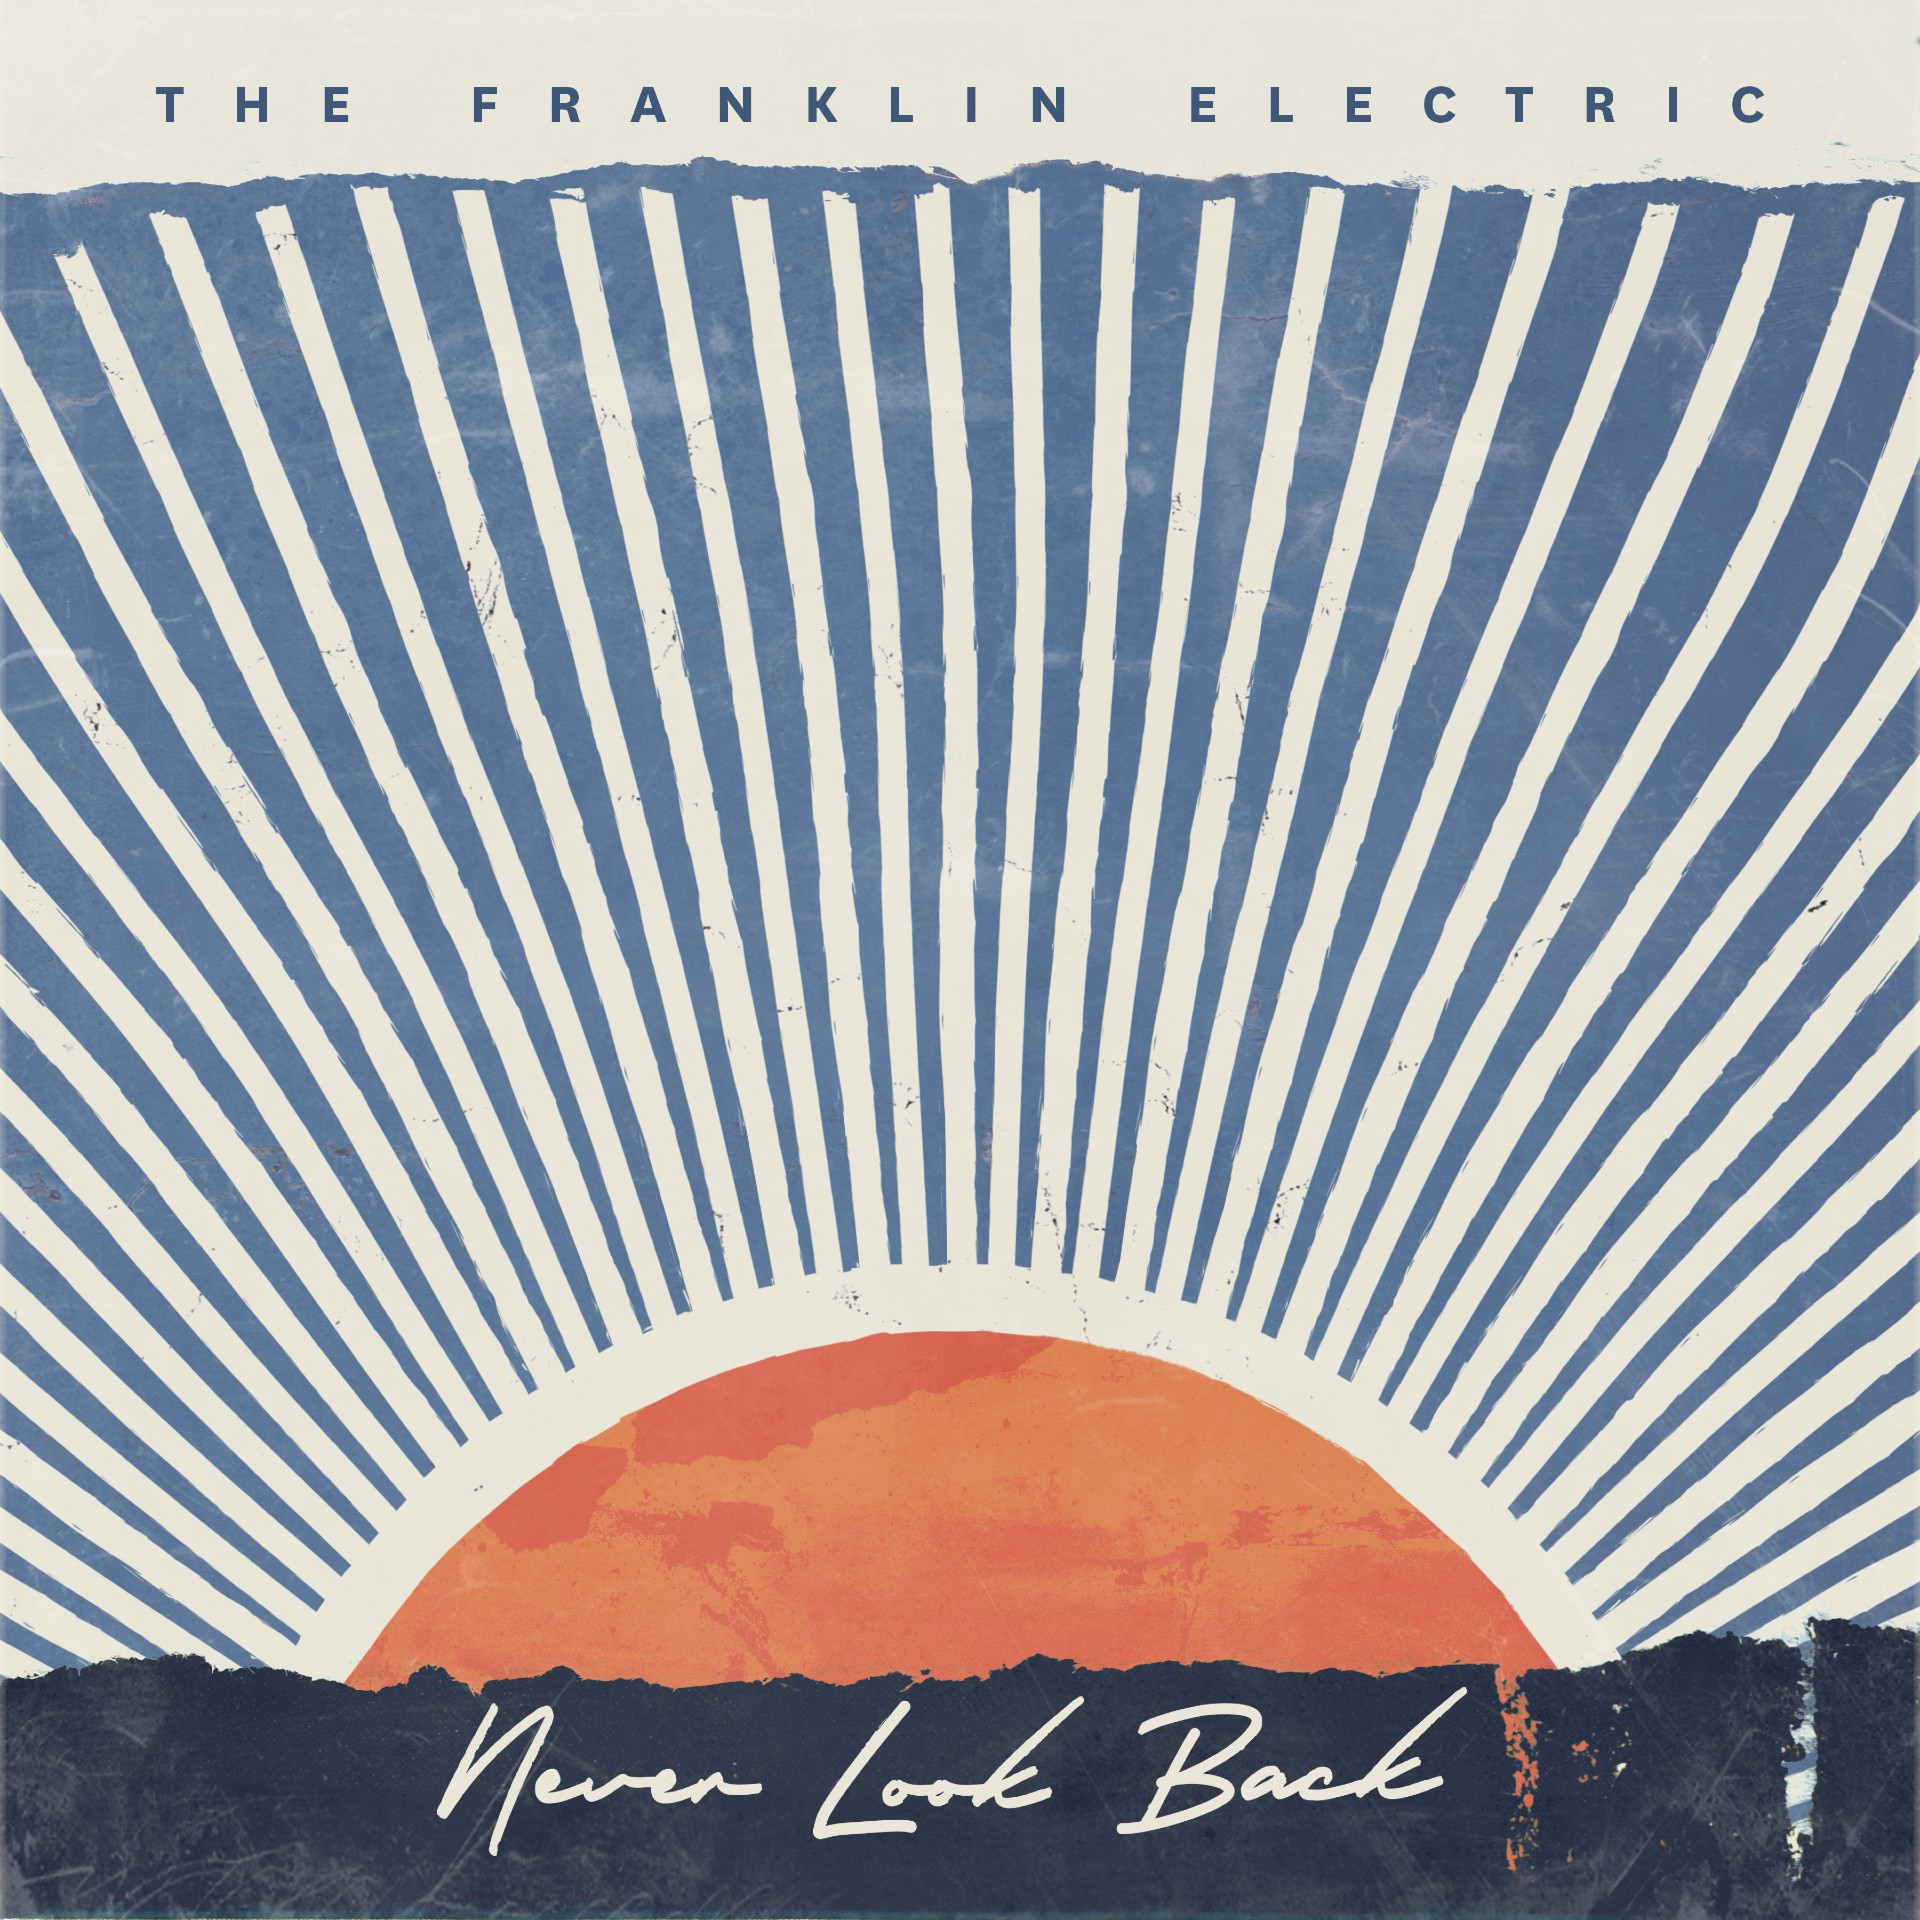 The Franklin Electric Focus on Lyricism on 'Never Look Back' 